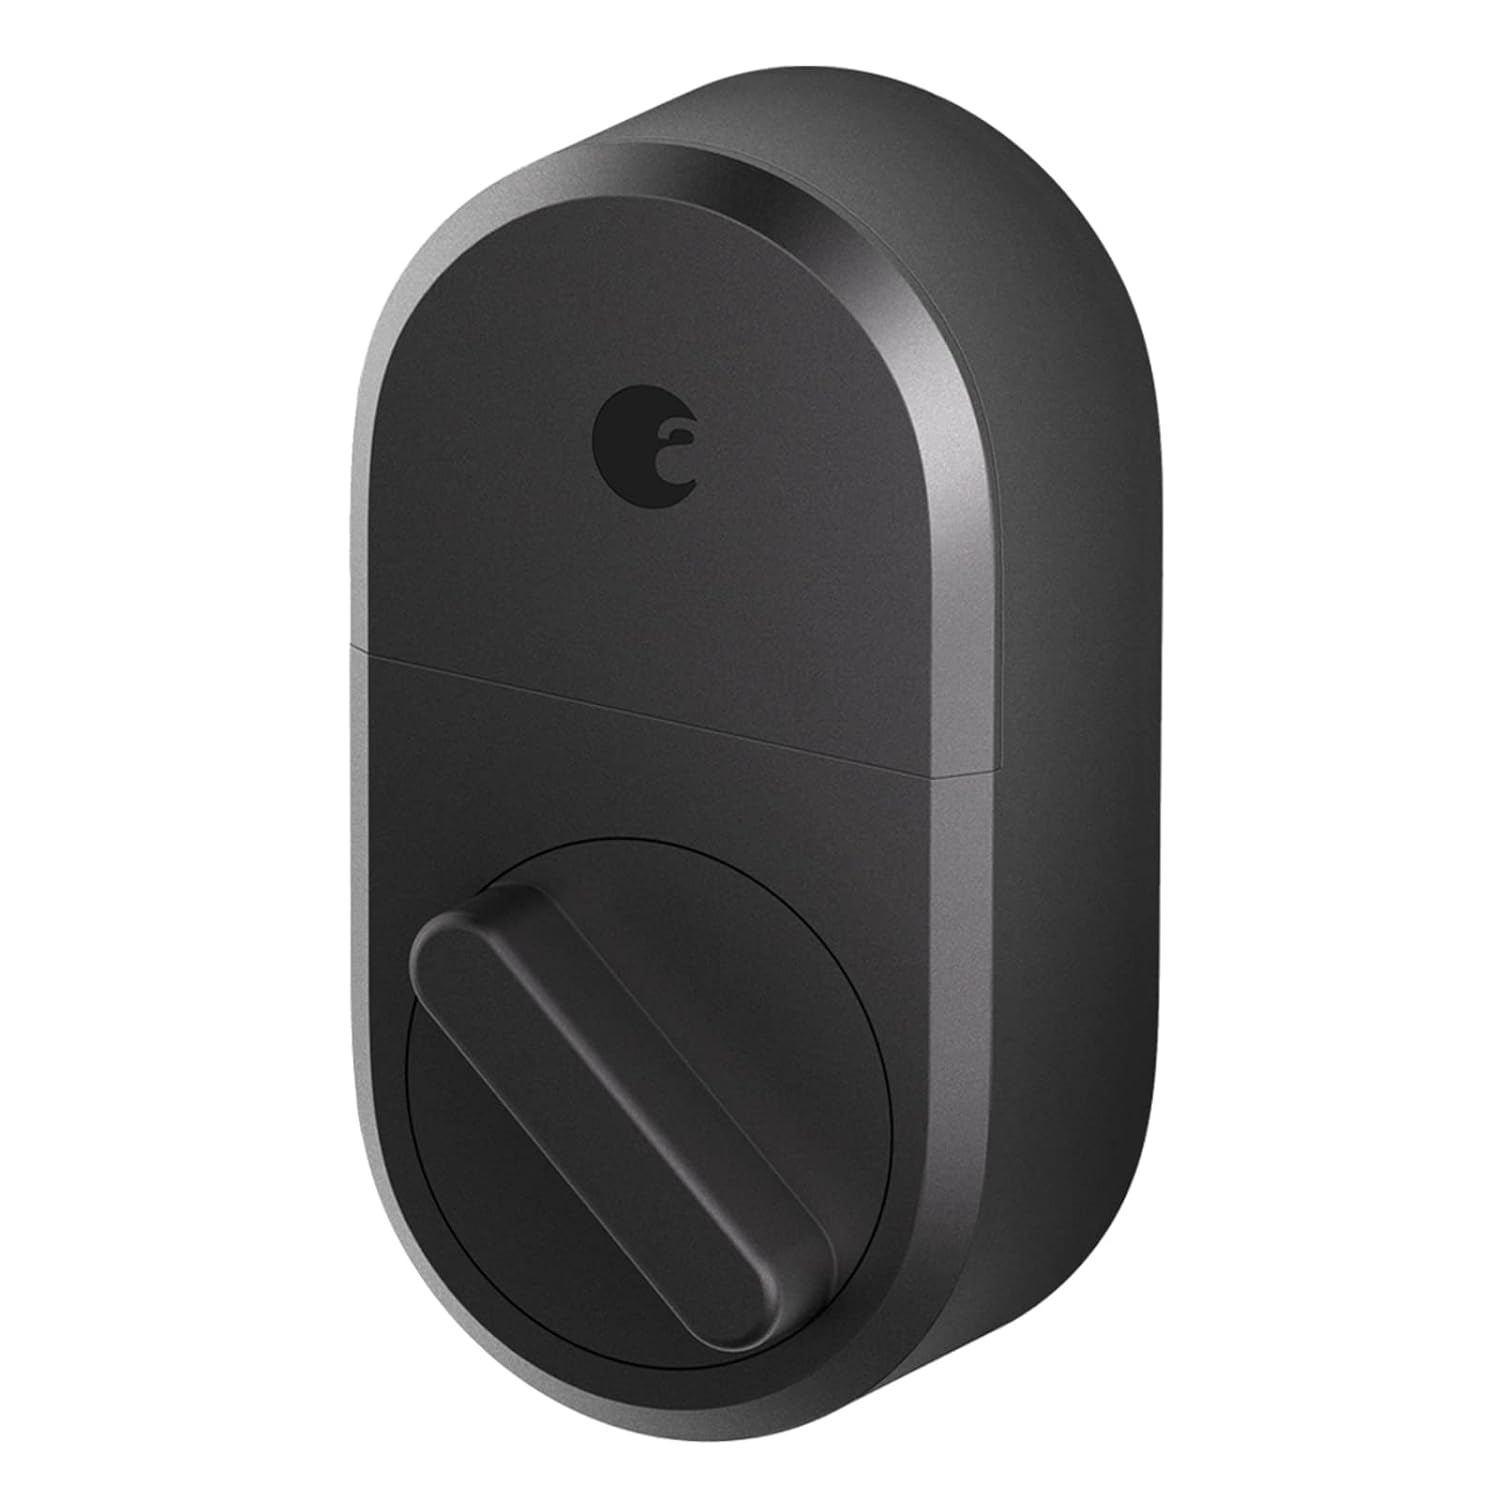 August Smart Lock, 3rd Gen technology - Dark Gray, Compatible with Alexa